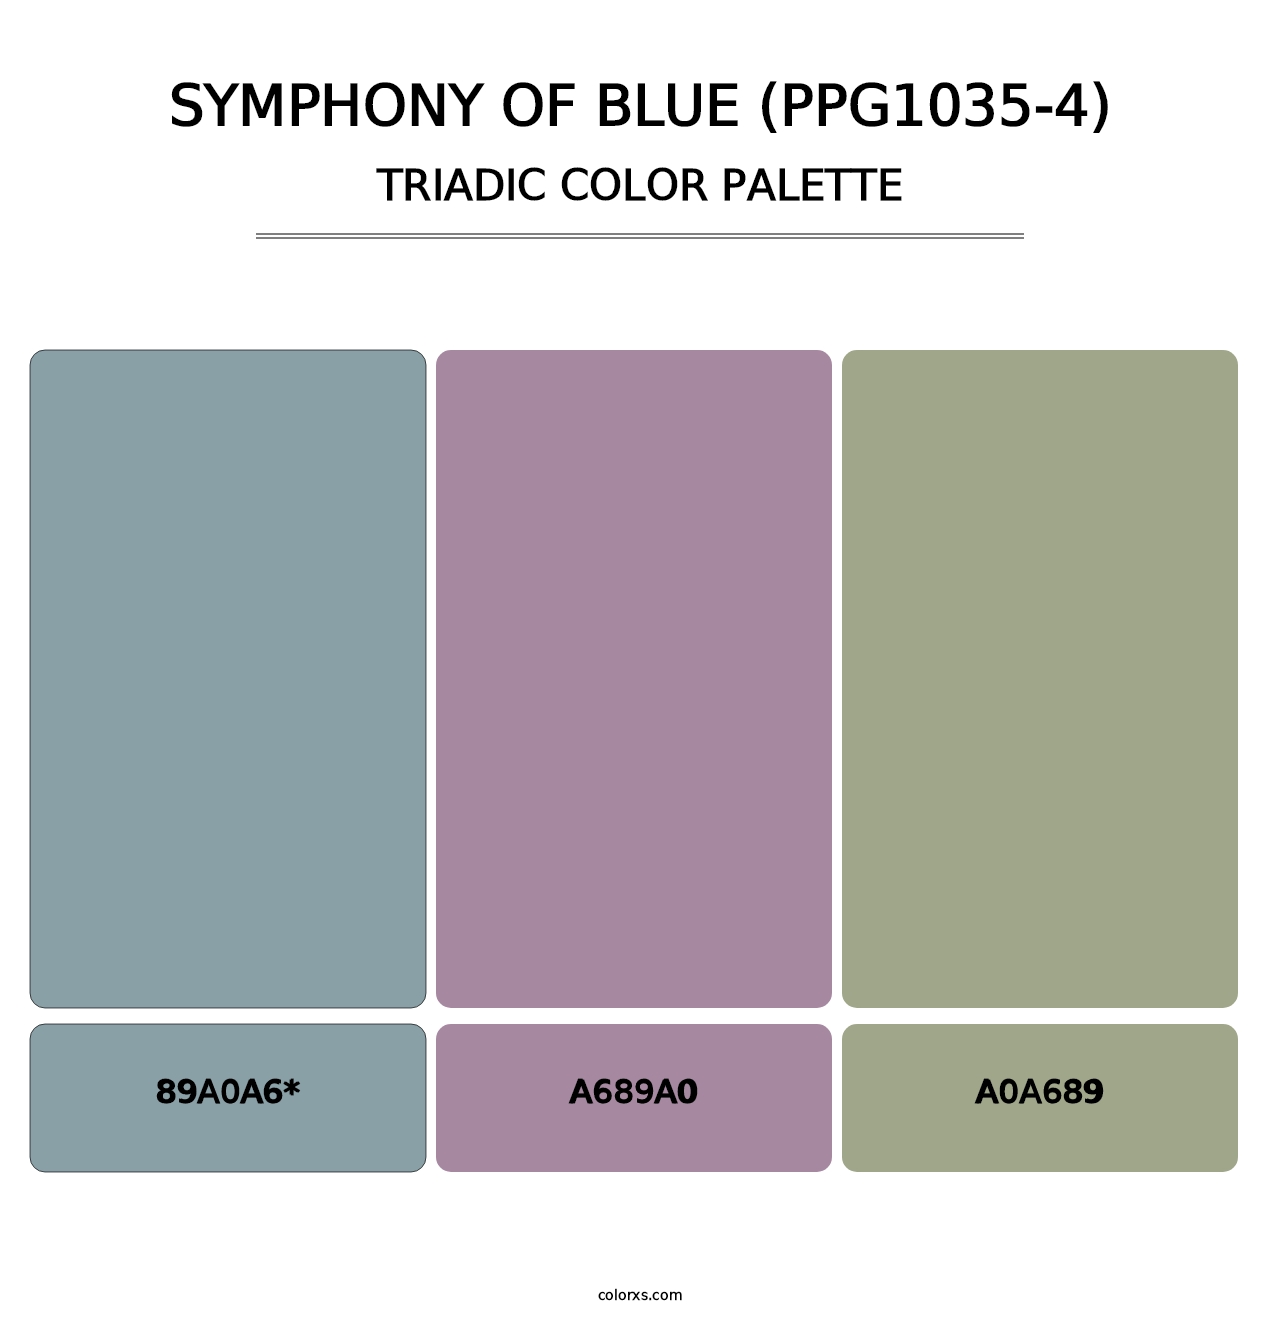 Symphony Of Blue (PPG1035-4) - Triadic Color Palette